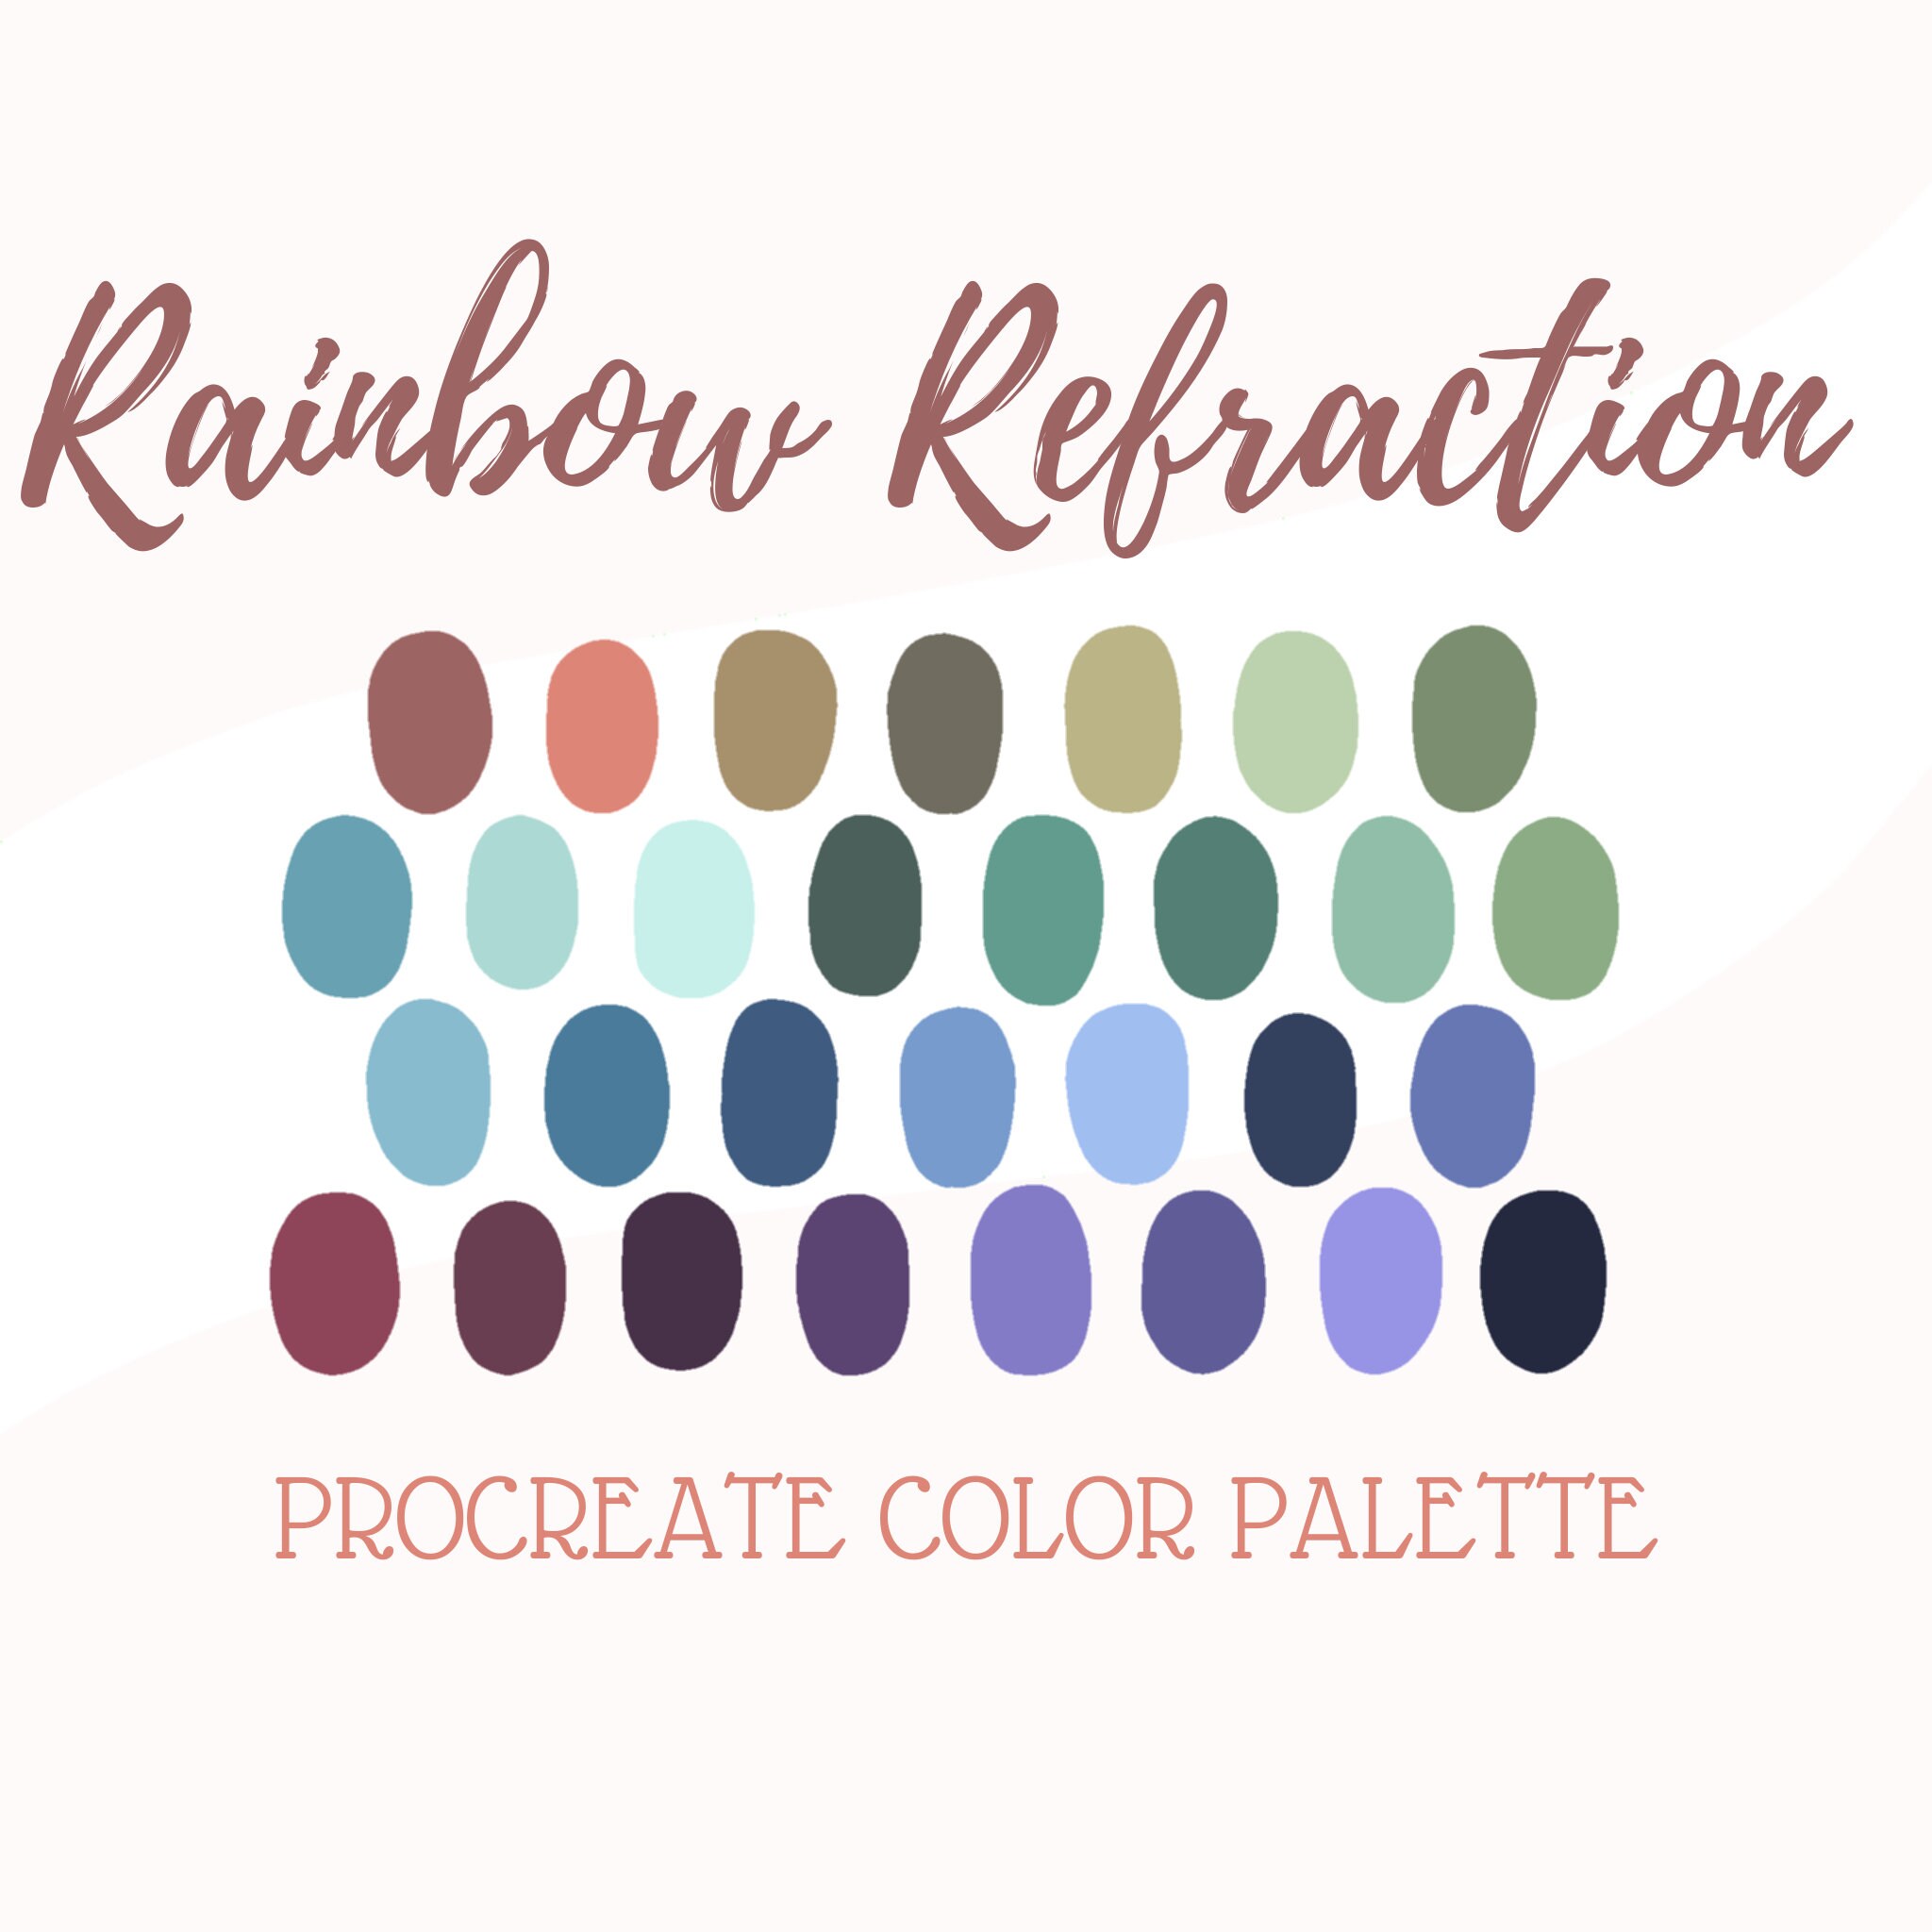 Procreate Color Palette Rainbow Refraction - Etsy